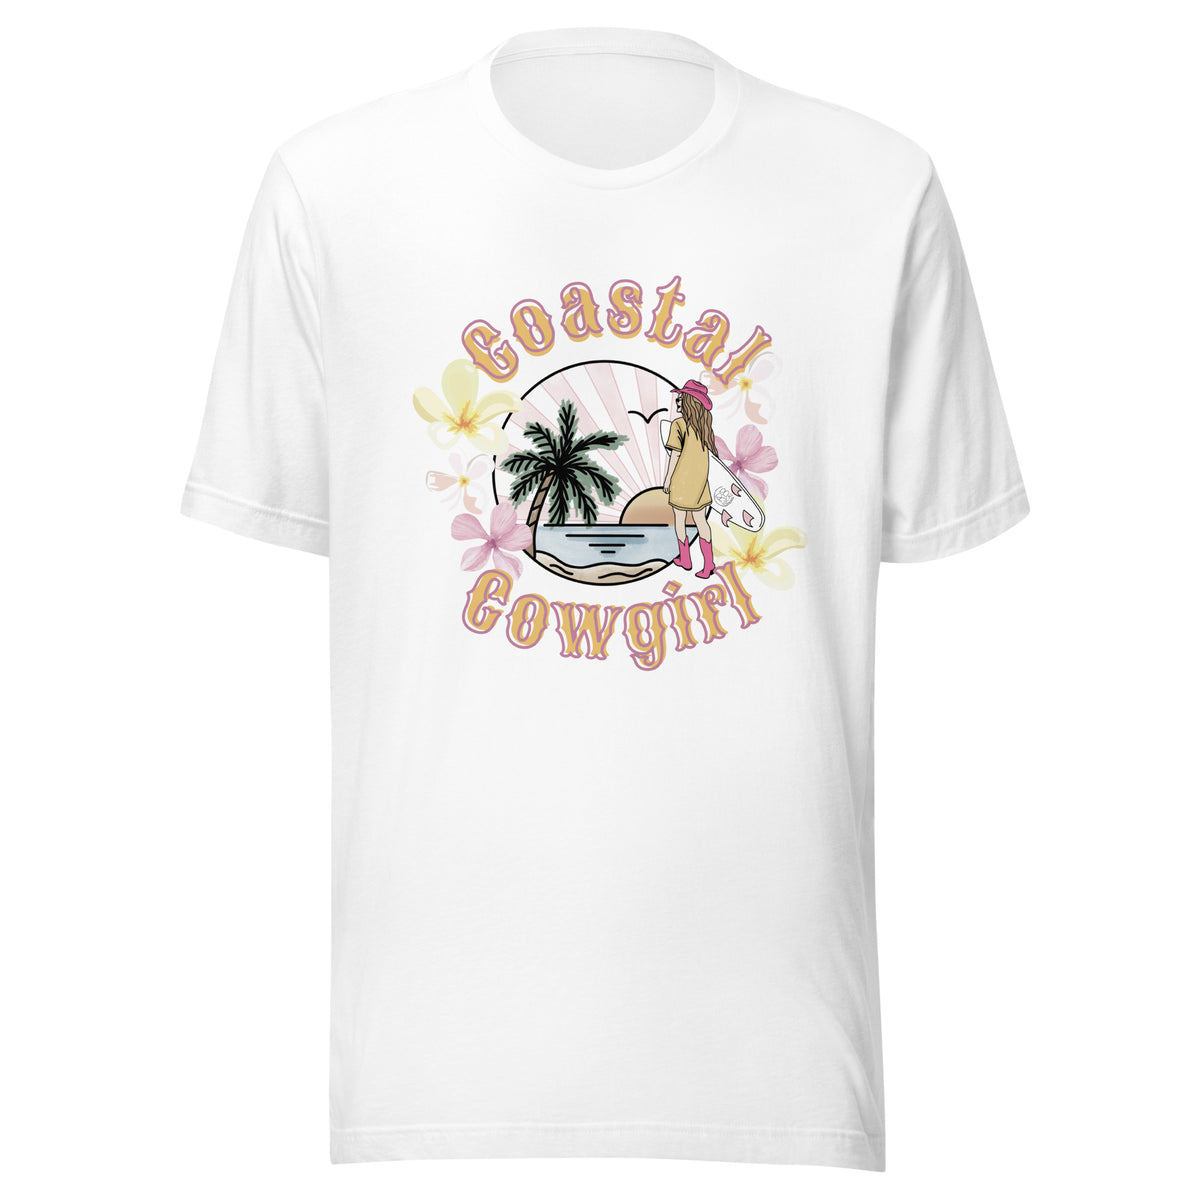 Coastal Cowgirl Beach Scene t-shirt